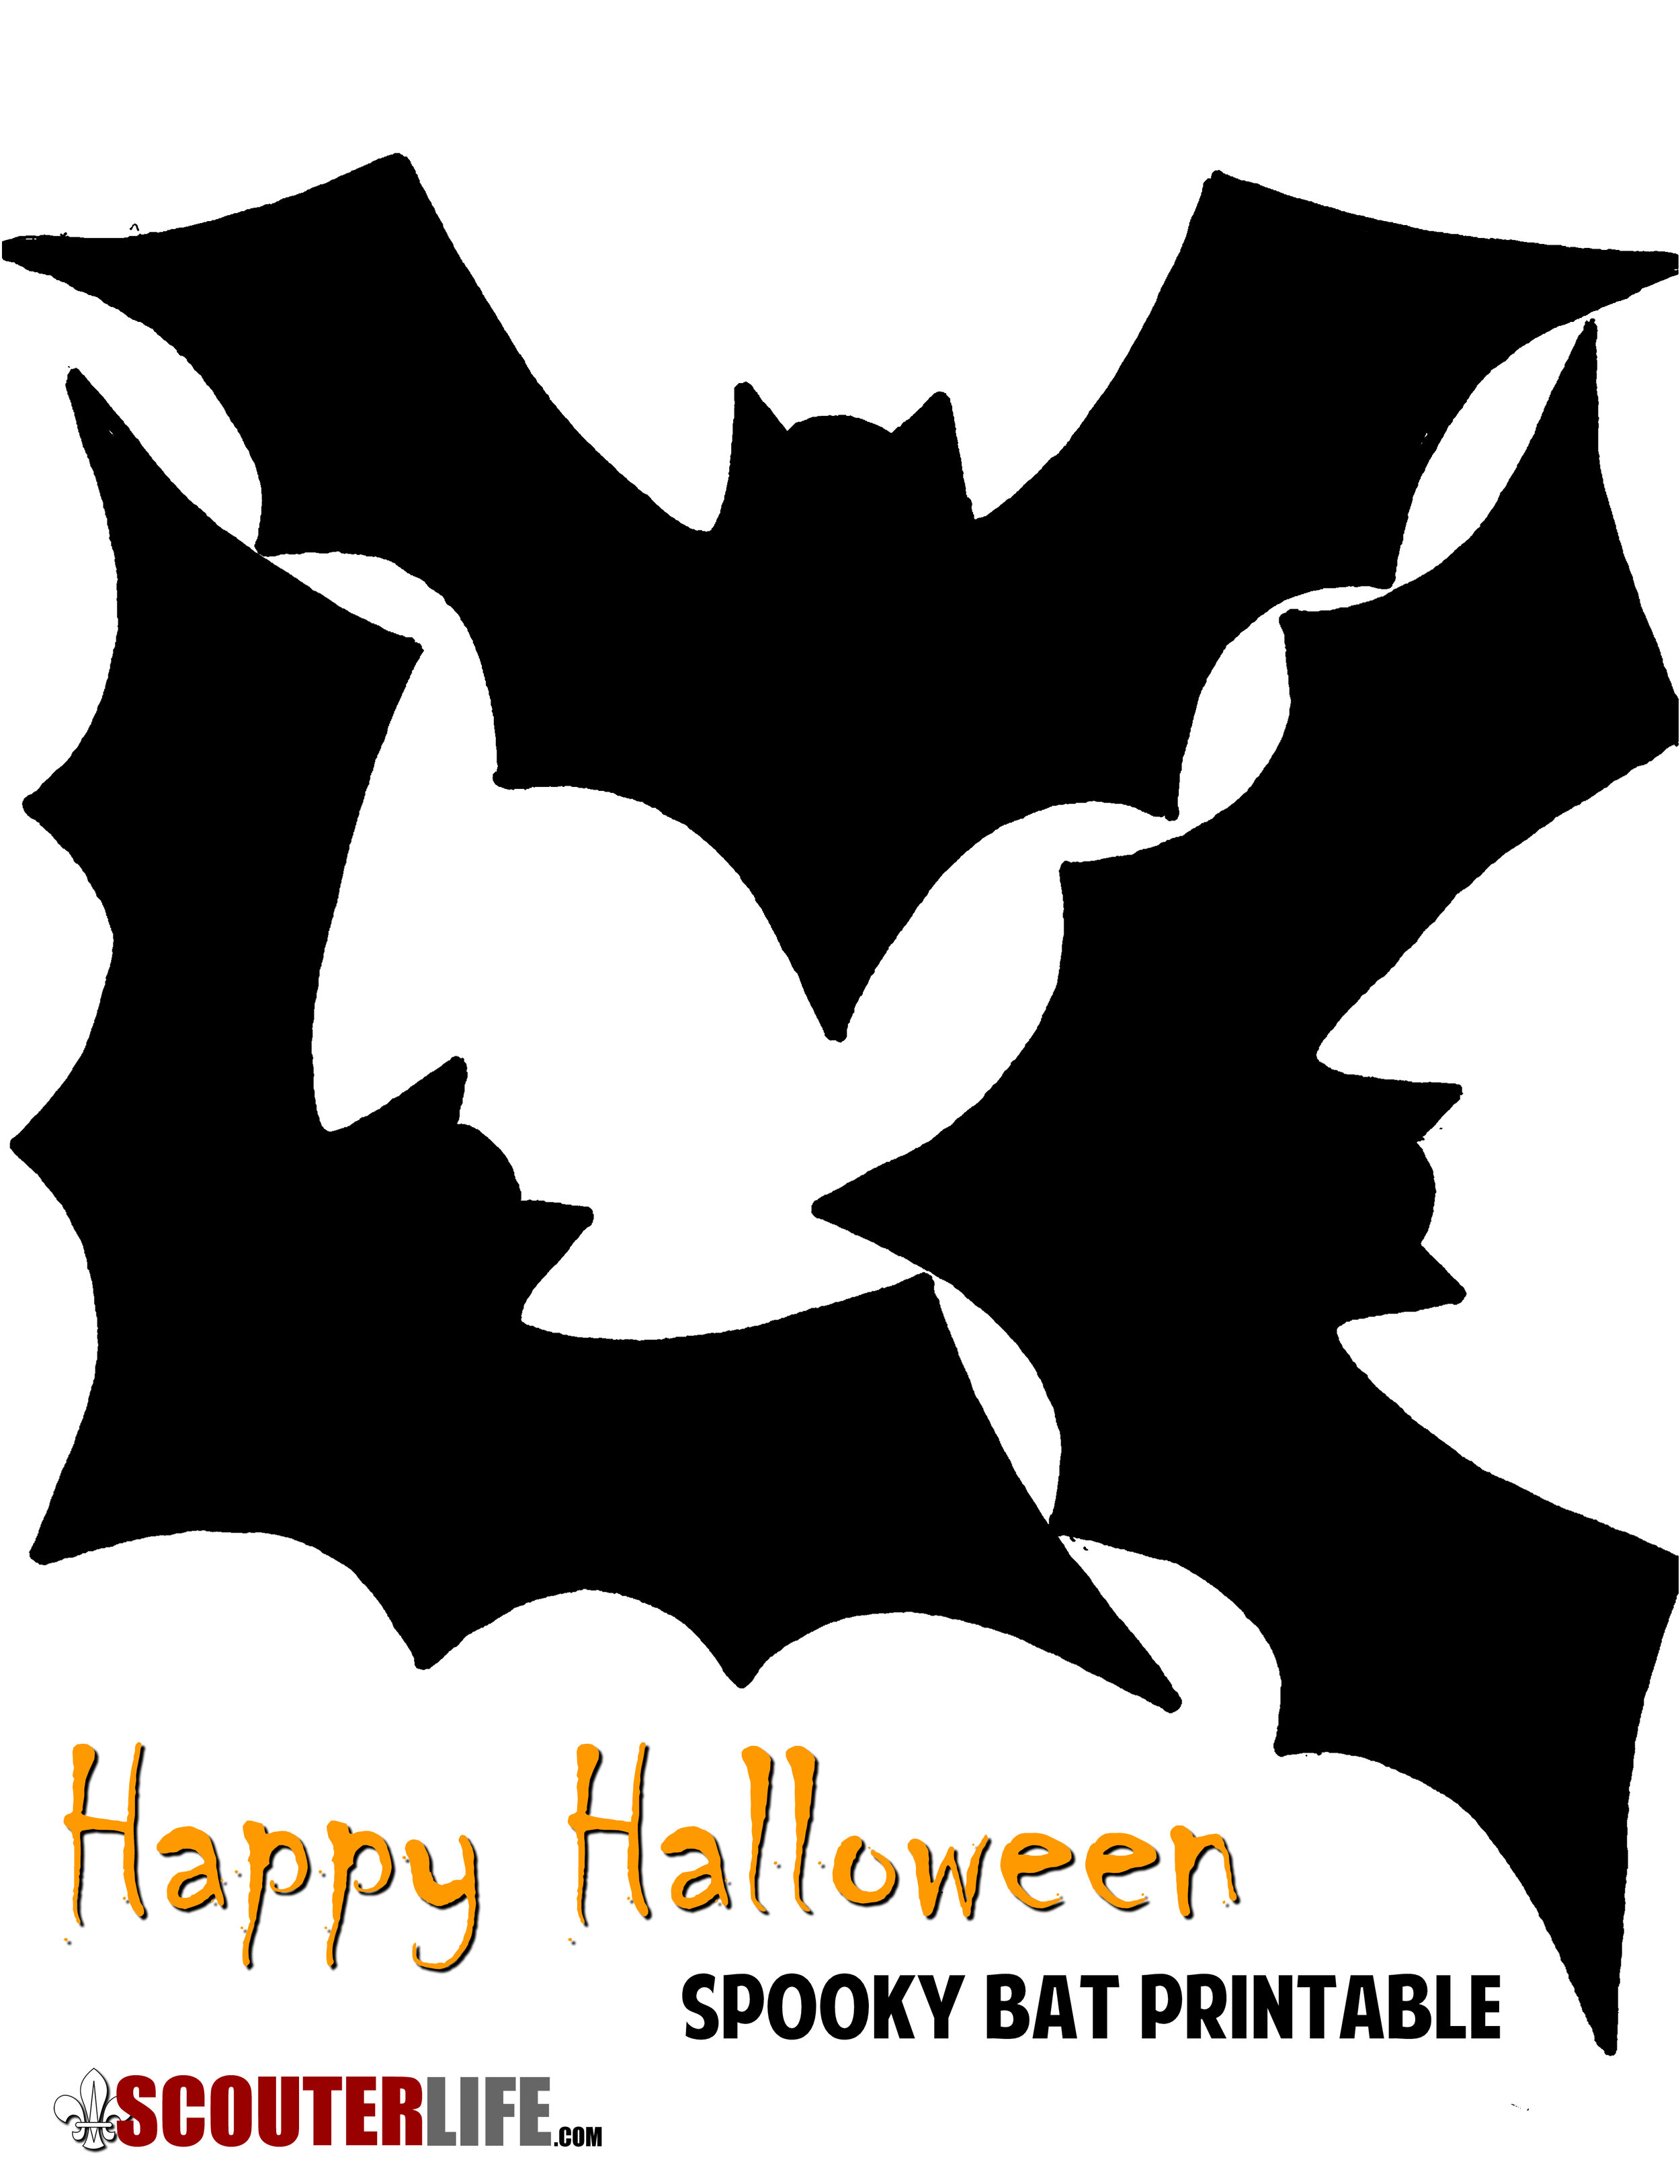 halloween-spooky-bat-printable-scouterlife